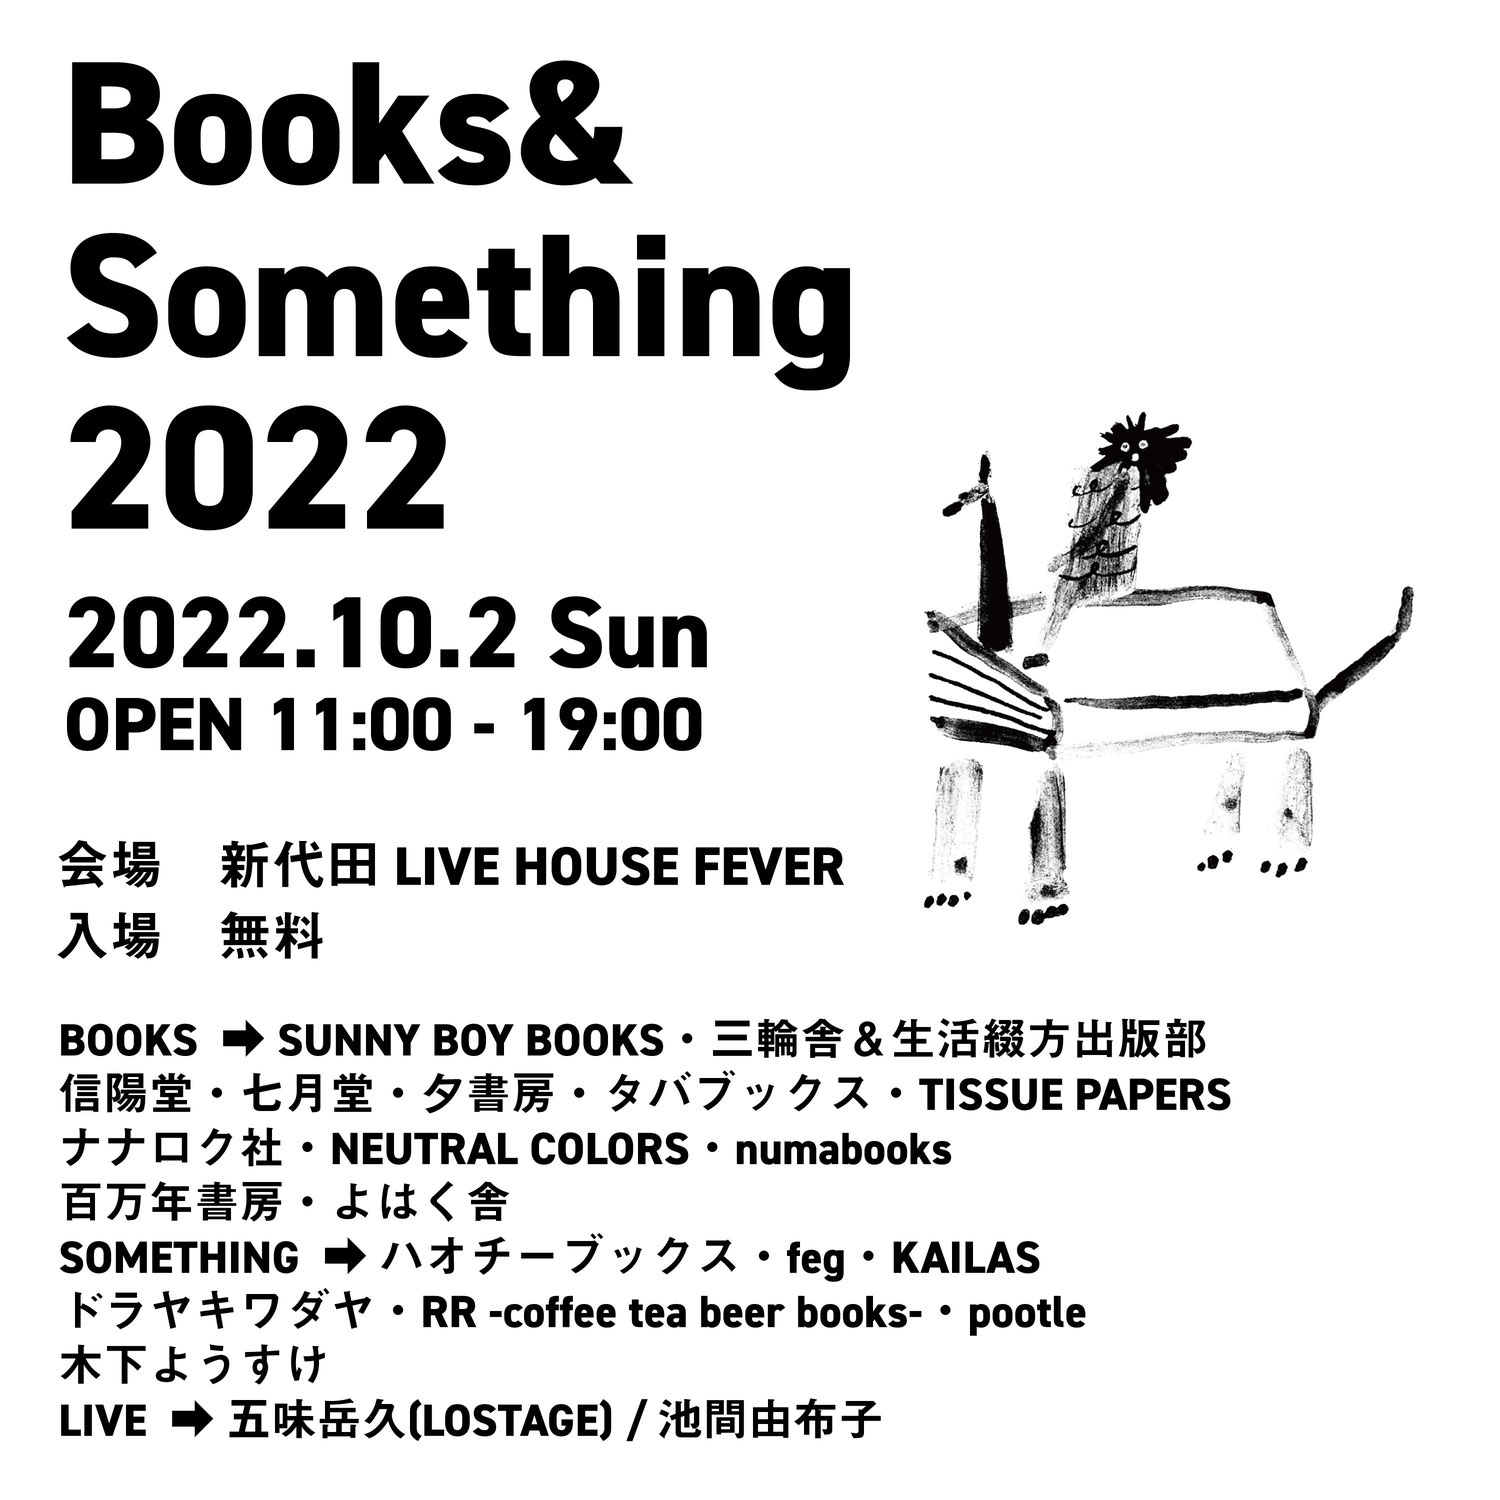 Books & Something 2022